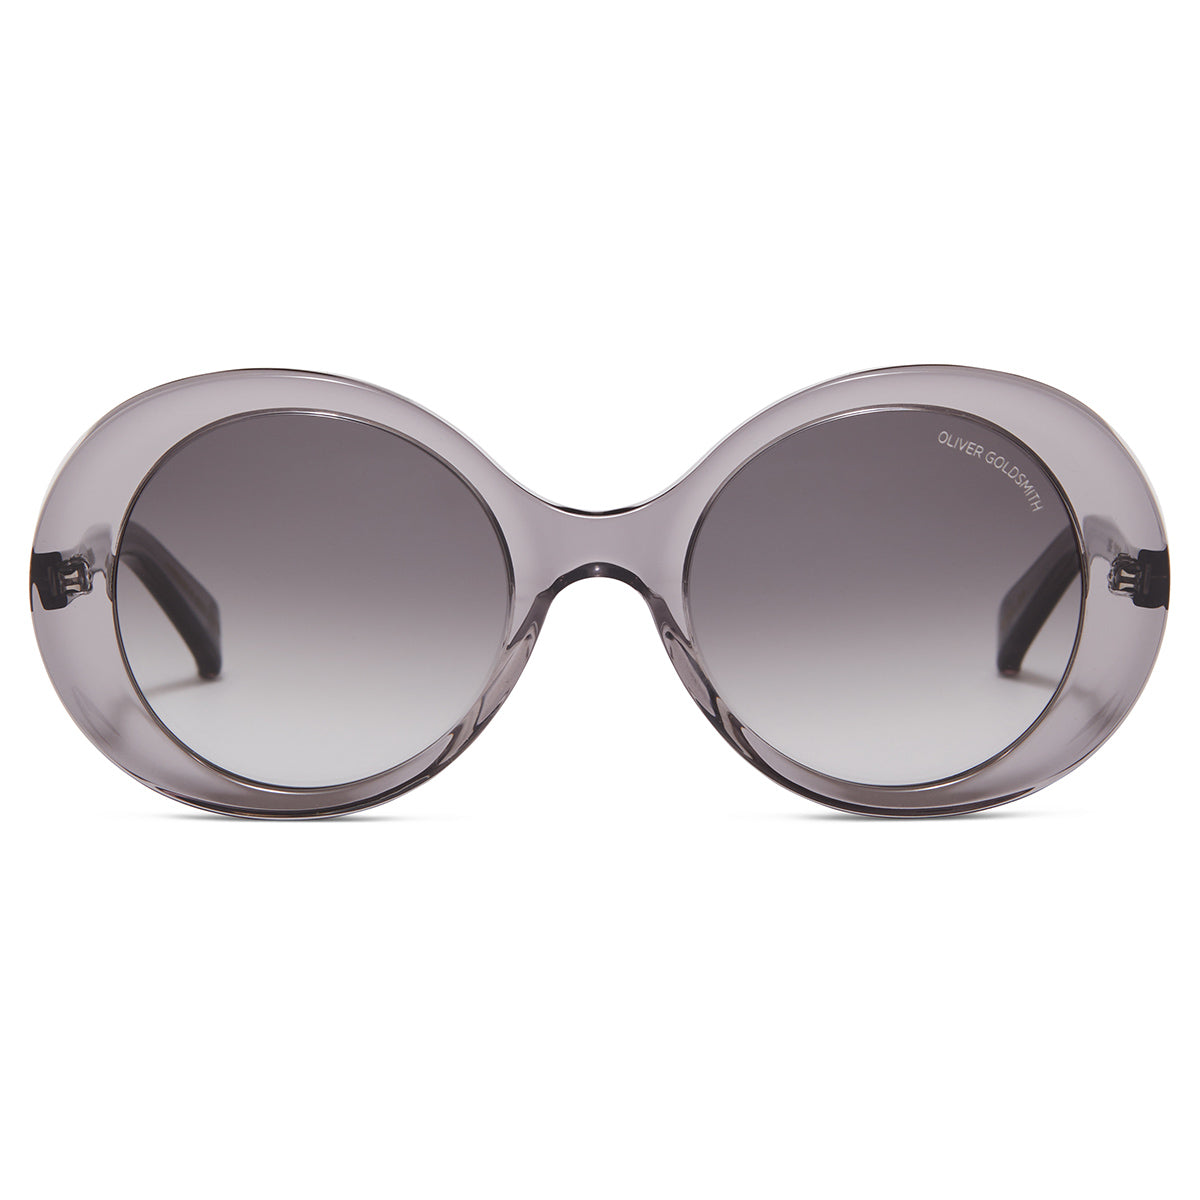 The 1960s | Goldsmith Oliver Sunglasses Round